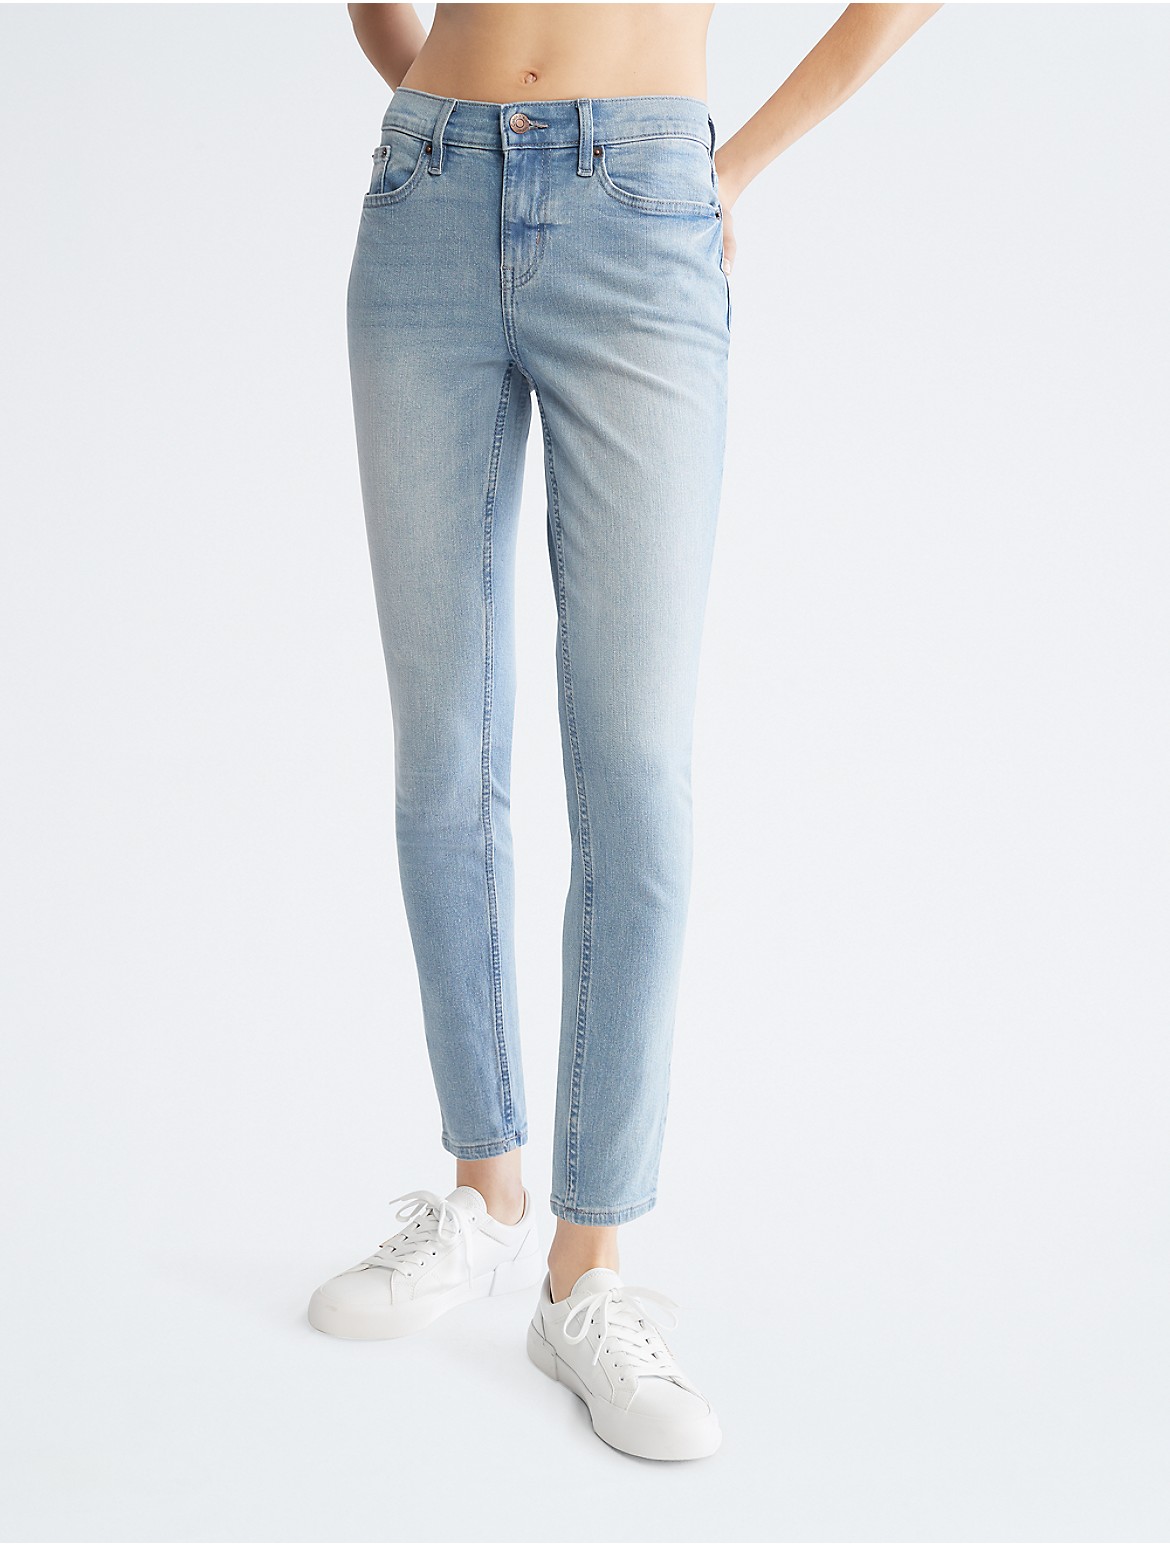 Calvin Klein Women's Skinny Fit Mid Rise Jeans - Blue - 24